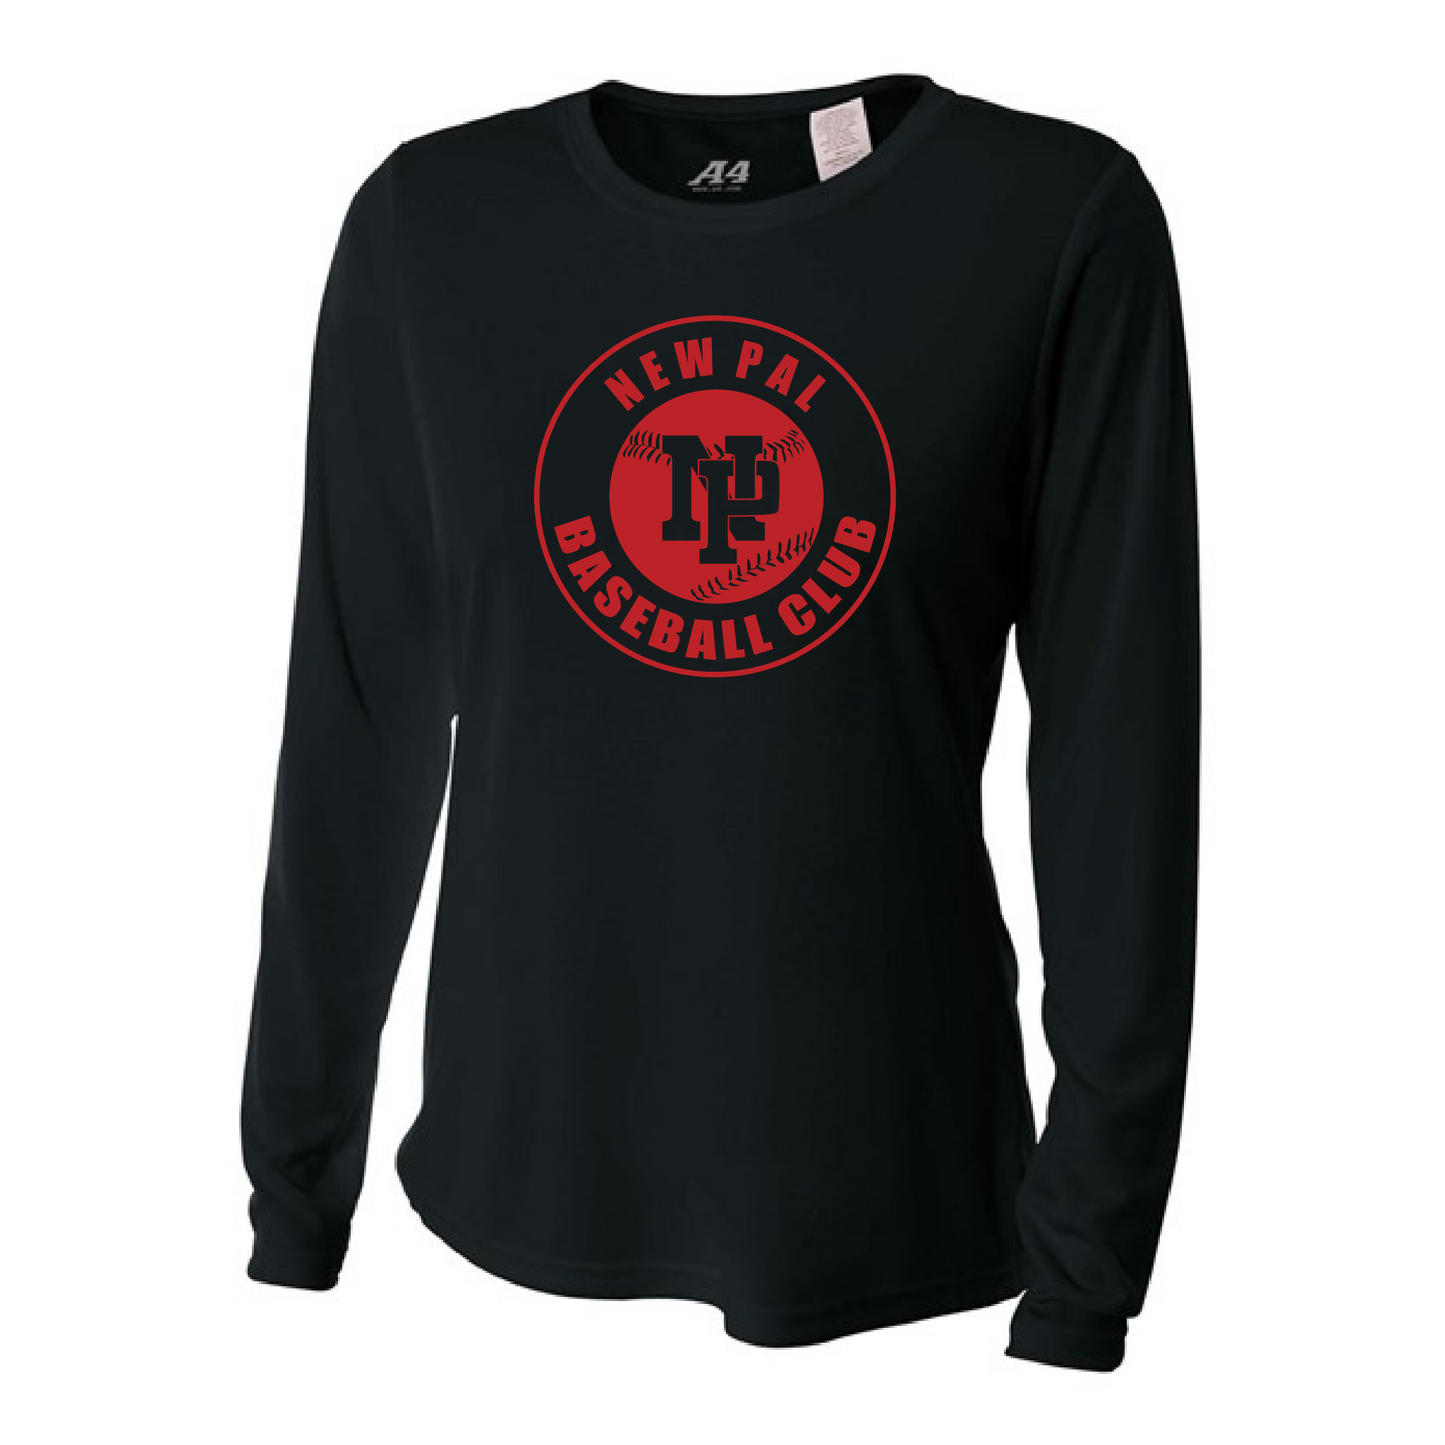 Womens Long Sleeve T-Shirt - NP Baseball Club (red logo)